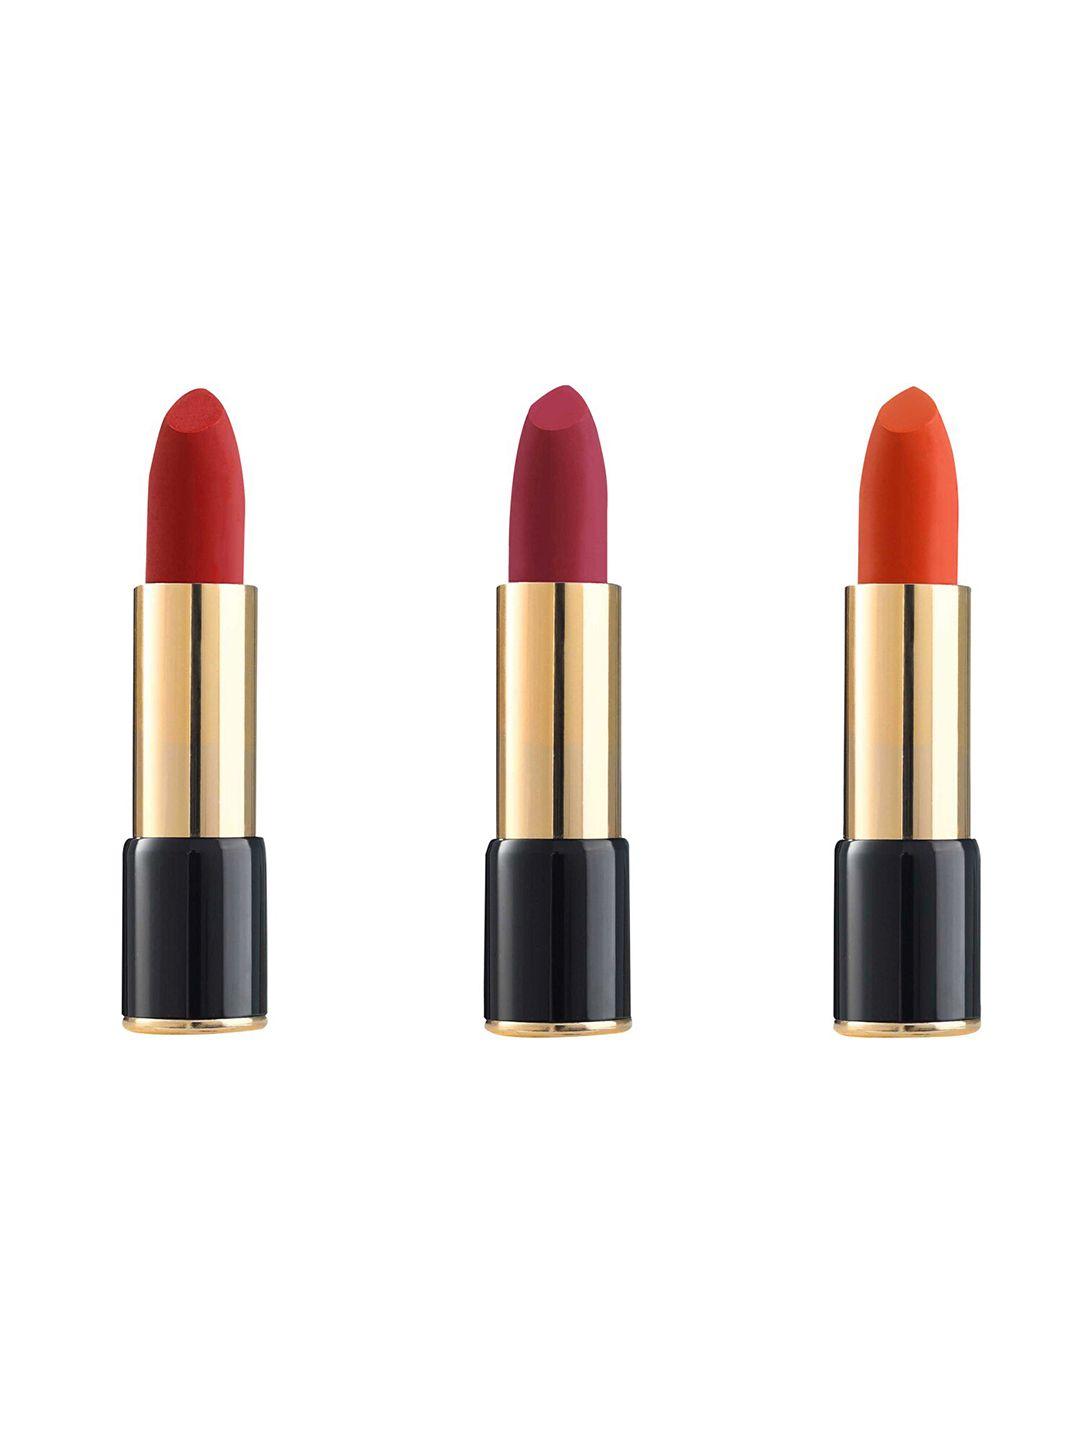 blushbee beauty set of 3 nourishing vegan matte lipsticks - bb01 + bb02 + bb05